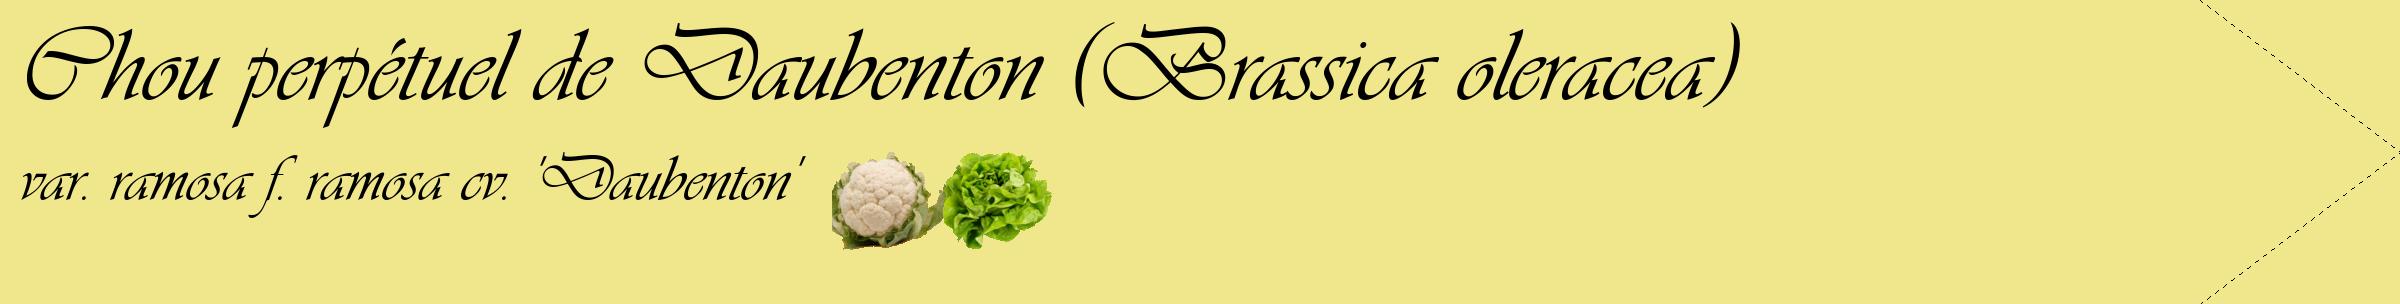 Étiquette de : Brassica oleracea var. ramosa f. ramosa cv. 'Daubenton' - format c - style noire20simple_simple_simpleviv avec comestibilité simplifiée